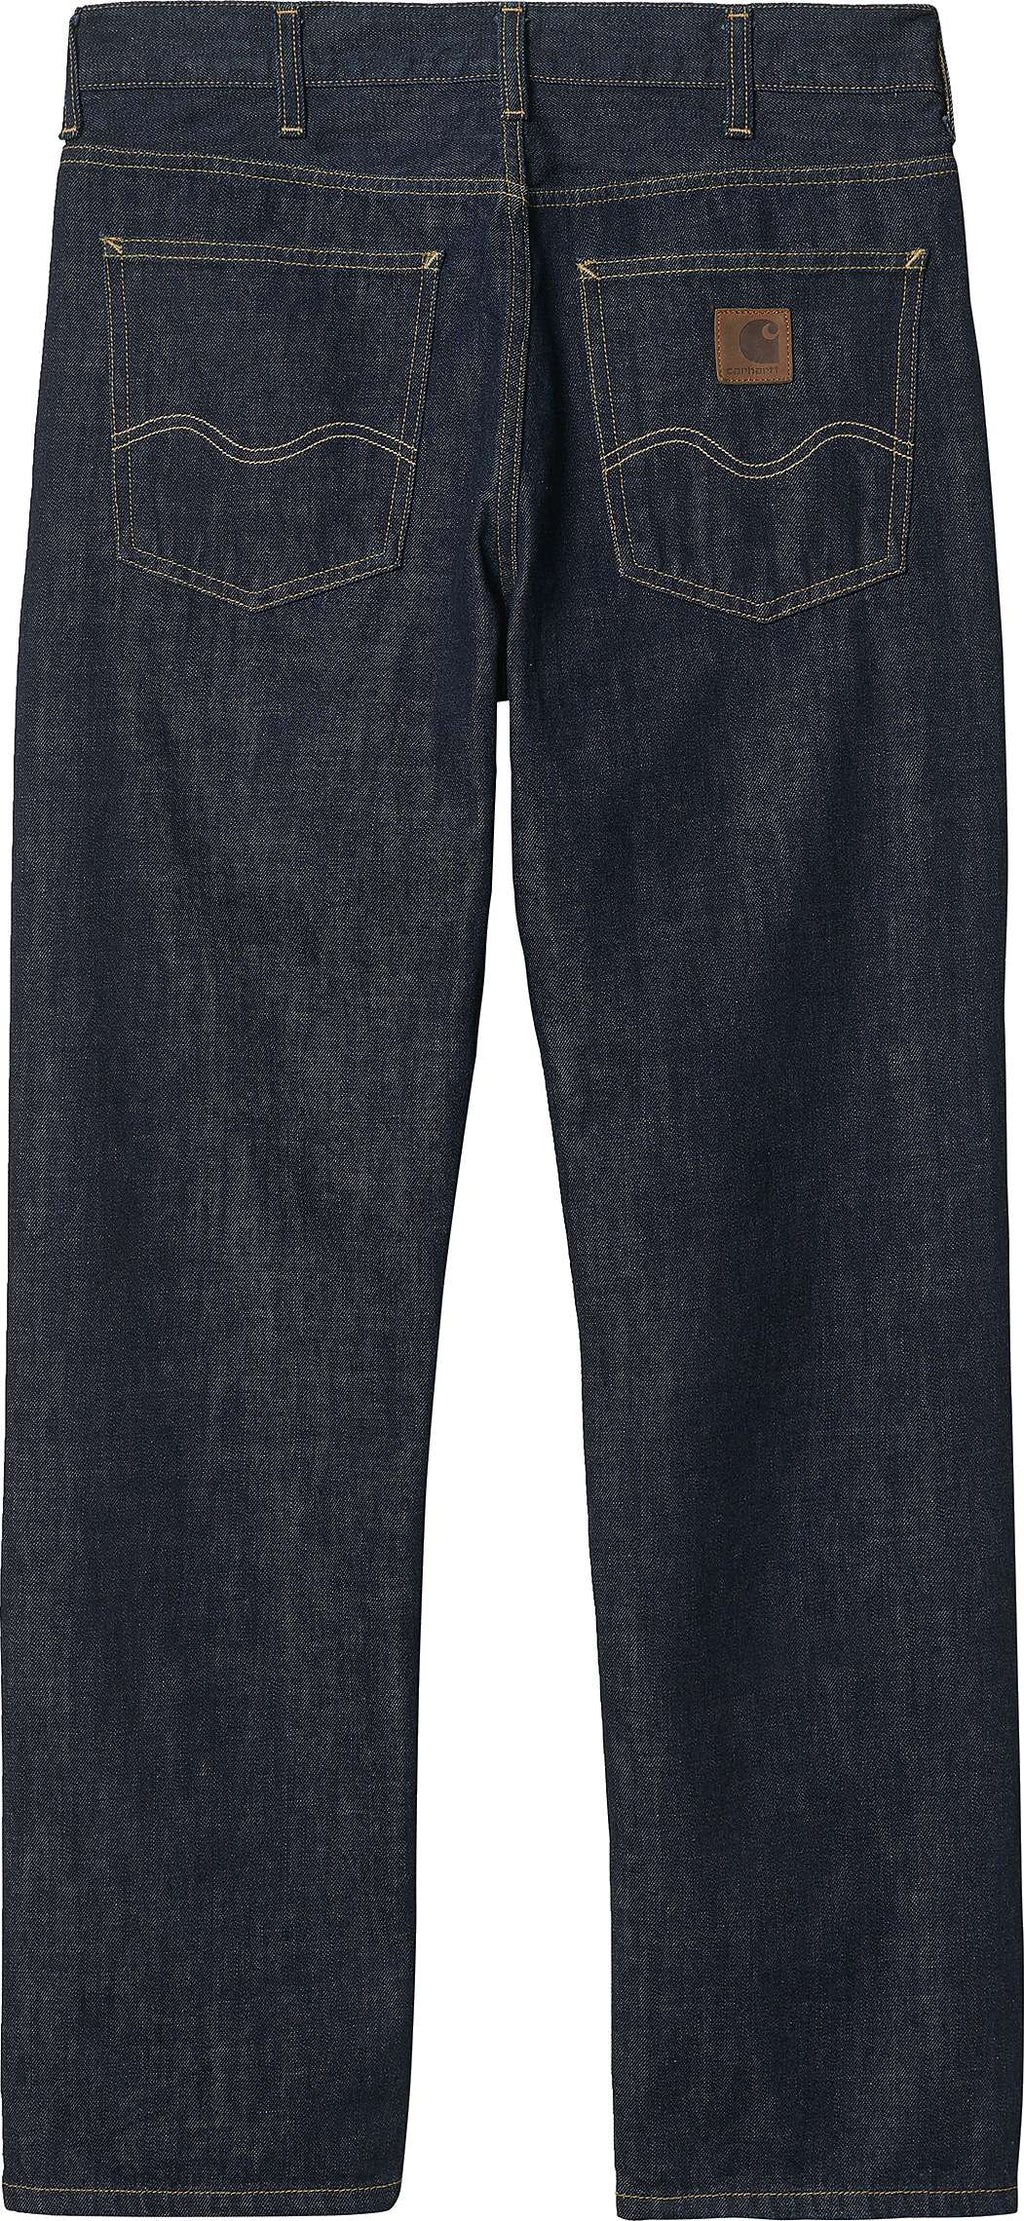  Carhartt Wip Pantaloni Jeans Marlow Pant Blue Rinsed Uomo - 1